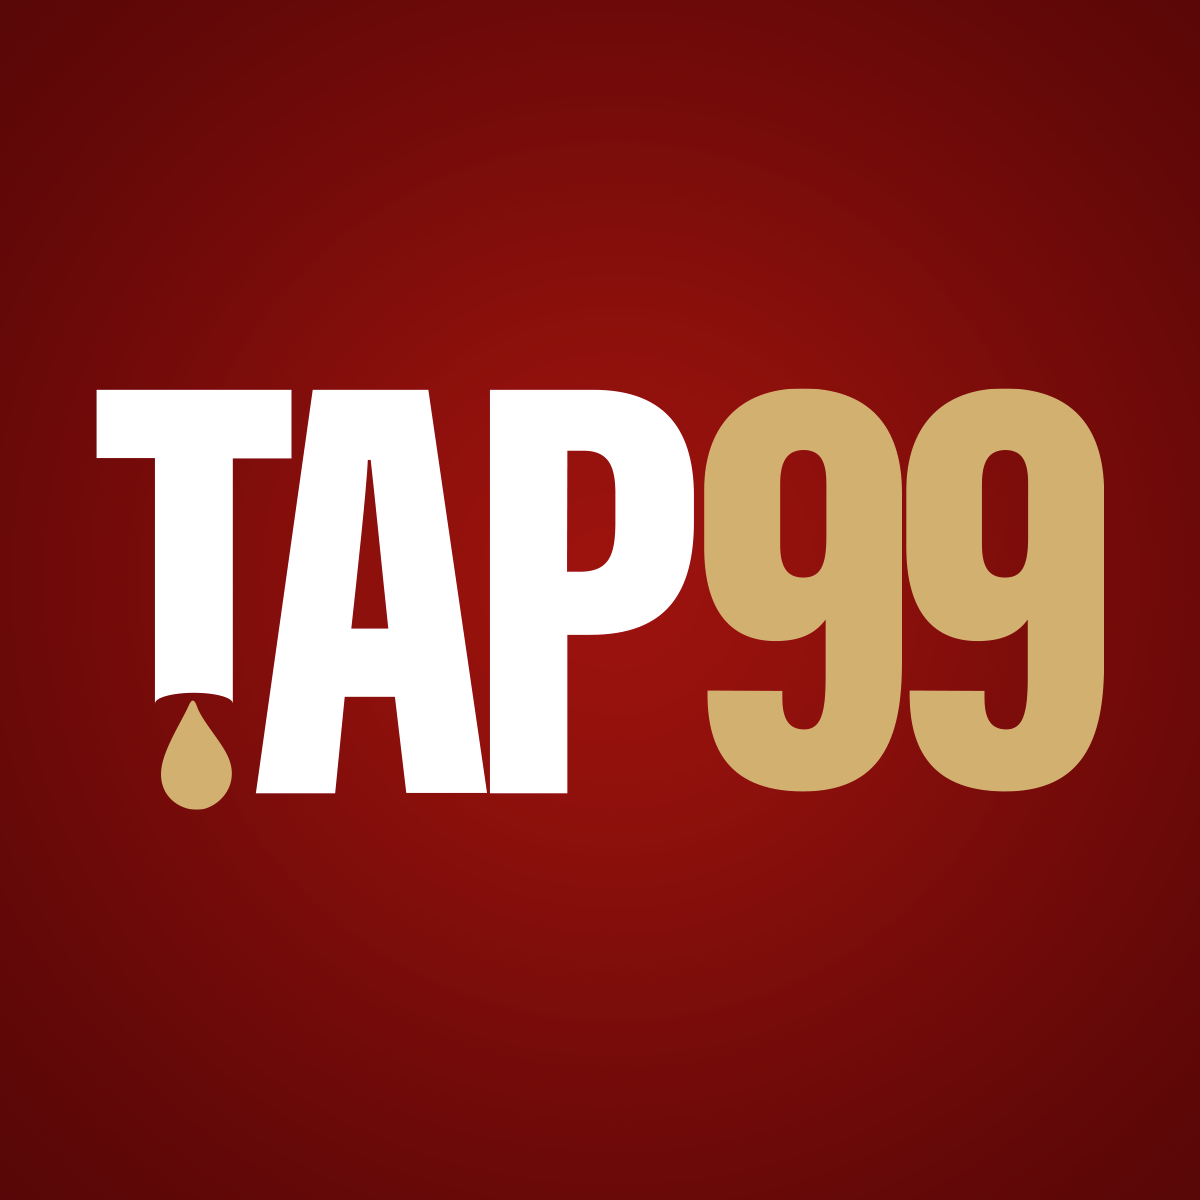 Tap99 Logo 2.jpg